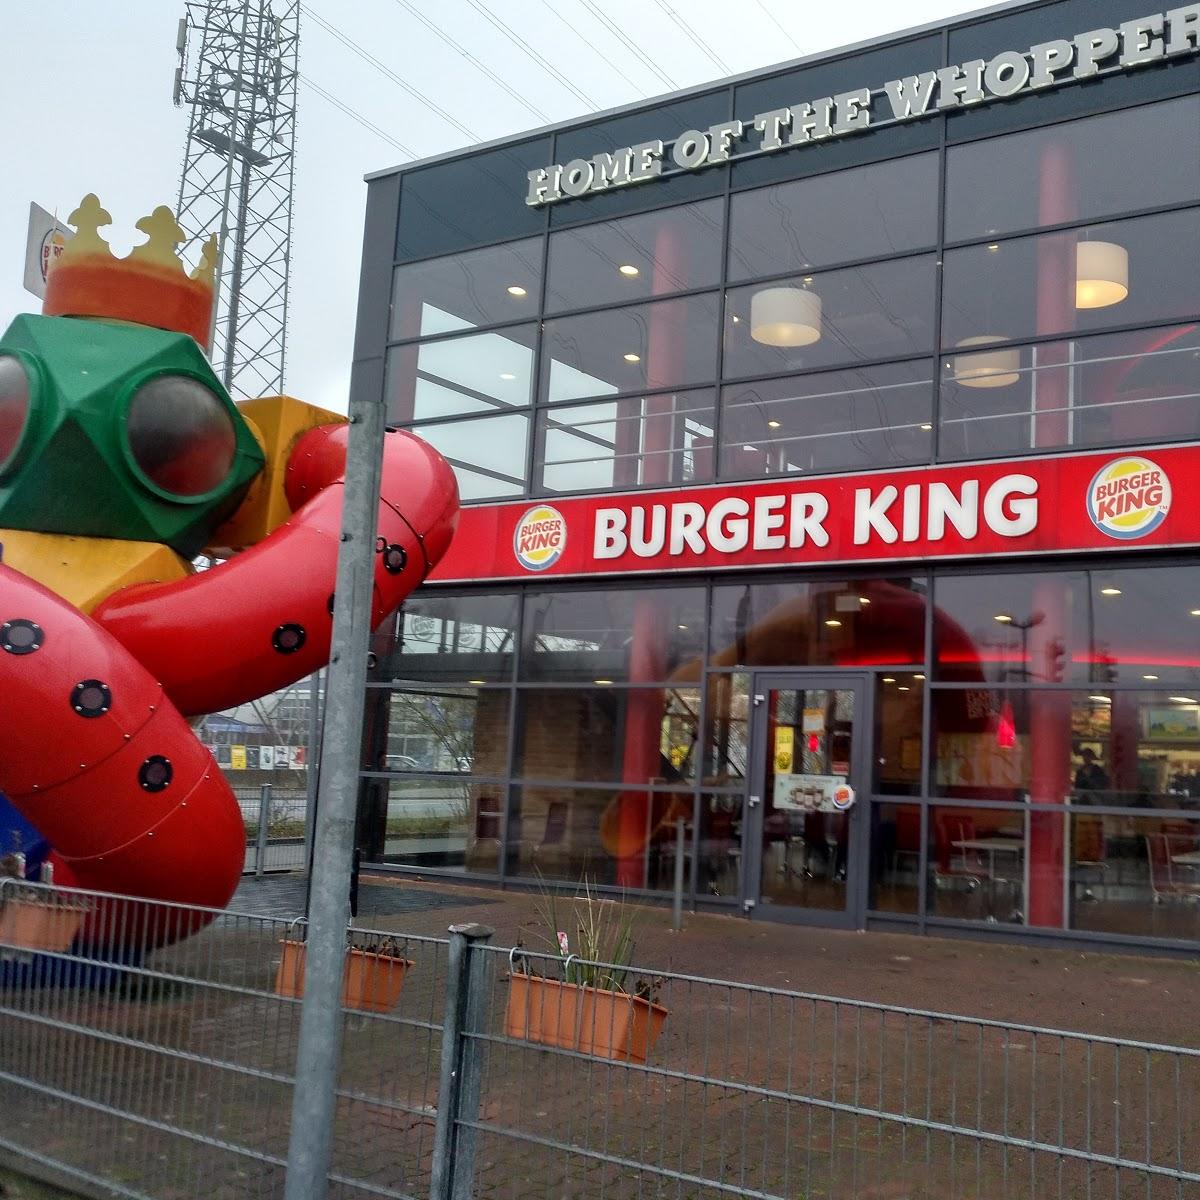 Restaurant "Burger King -Lahe" in Hannover